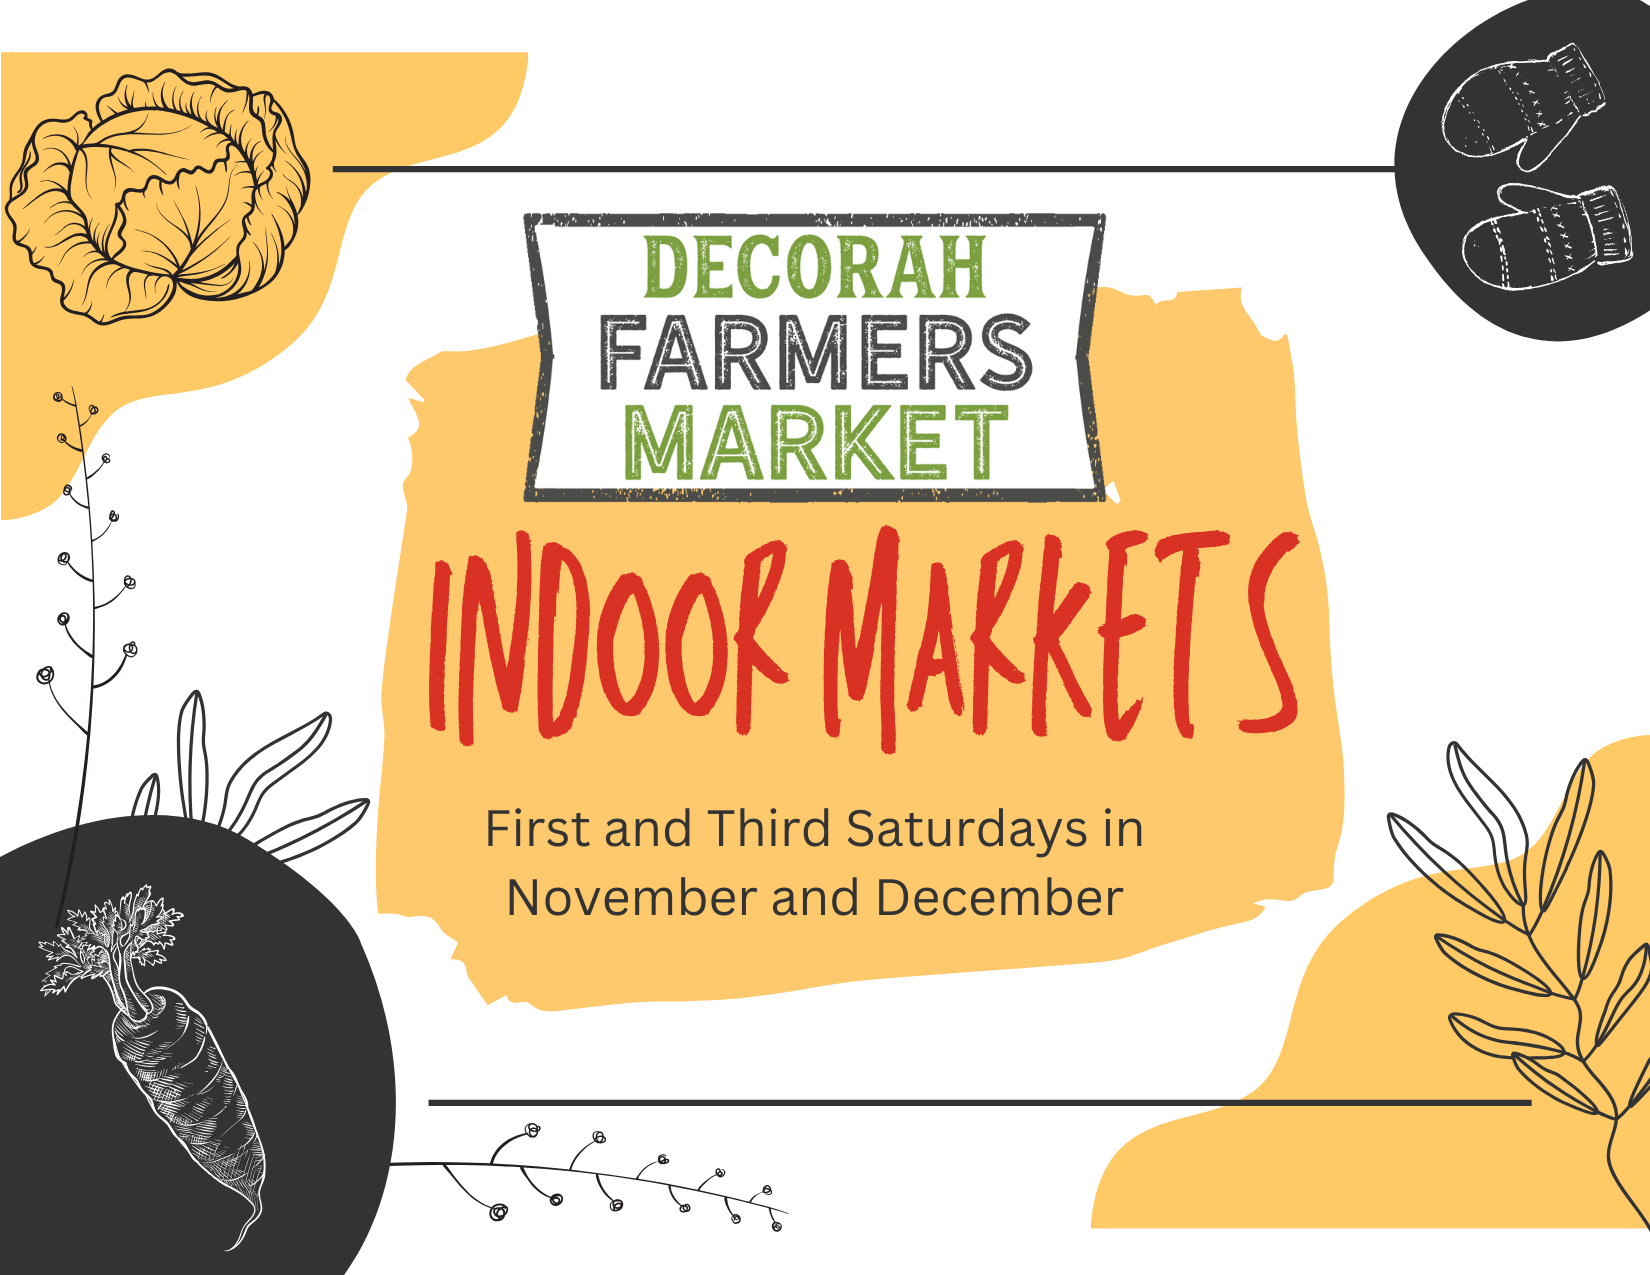 Decorah Farmers Market: Indoor Market - Holiday Hosting Ideas! thumbnail